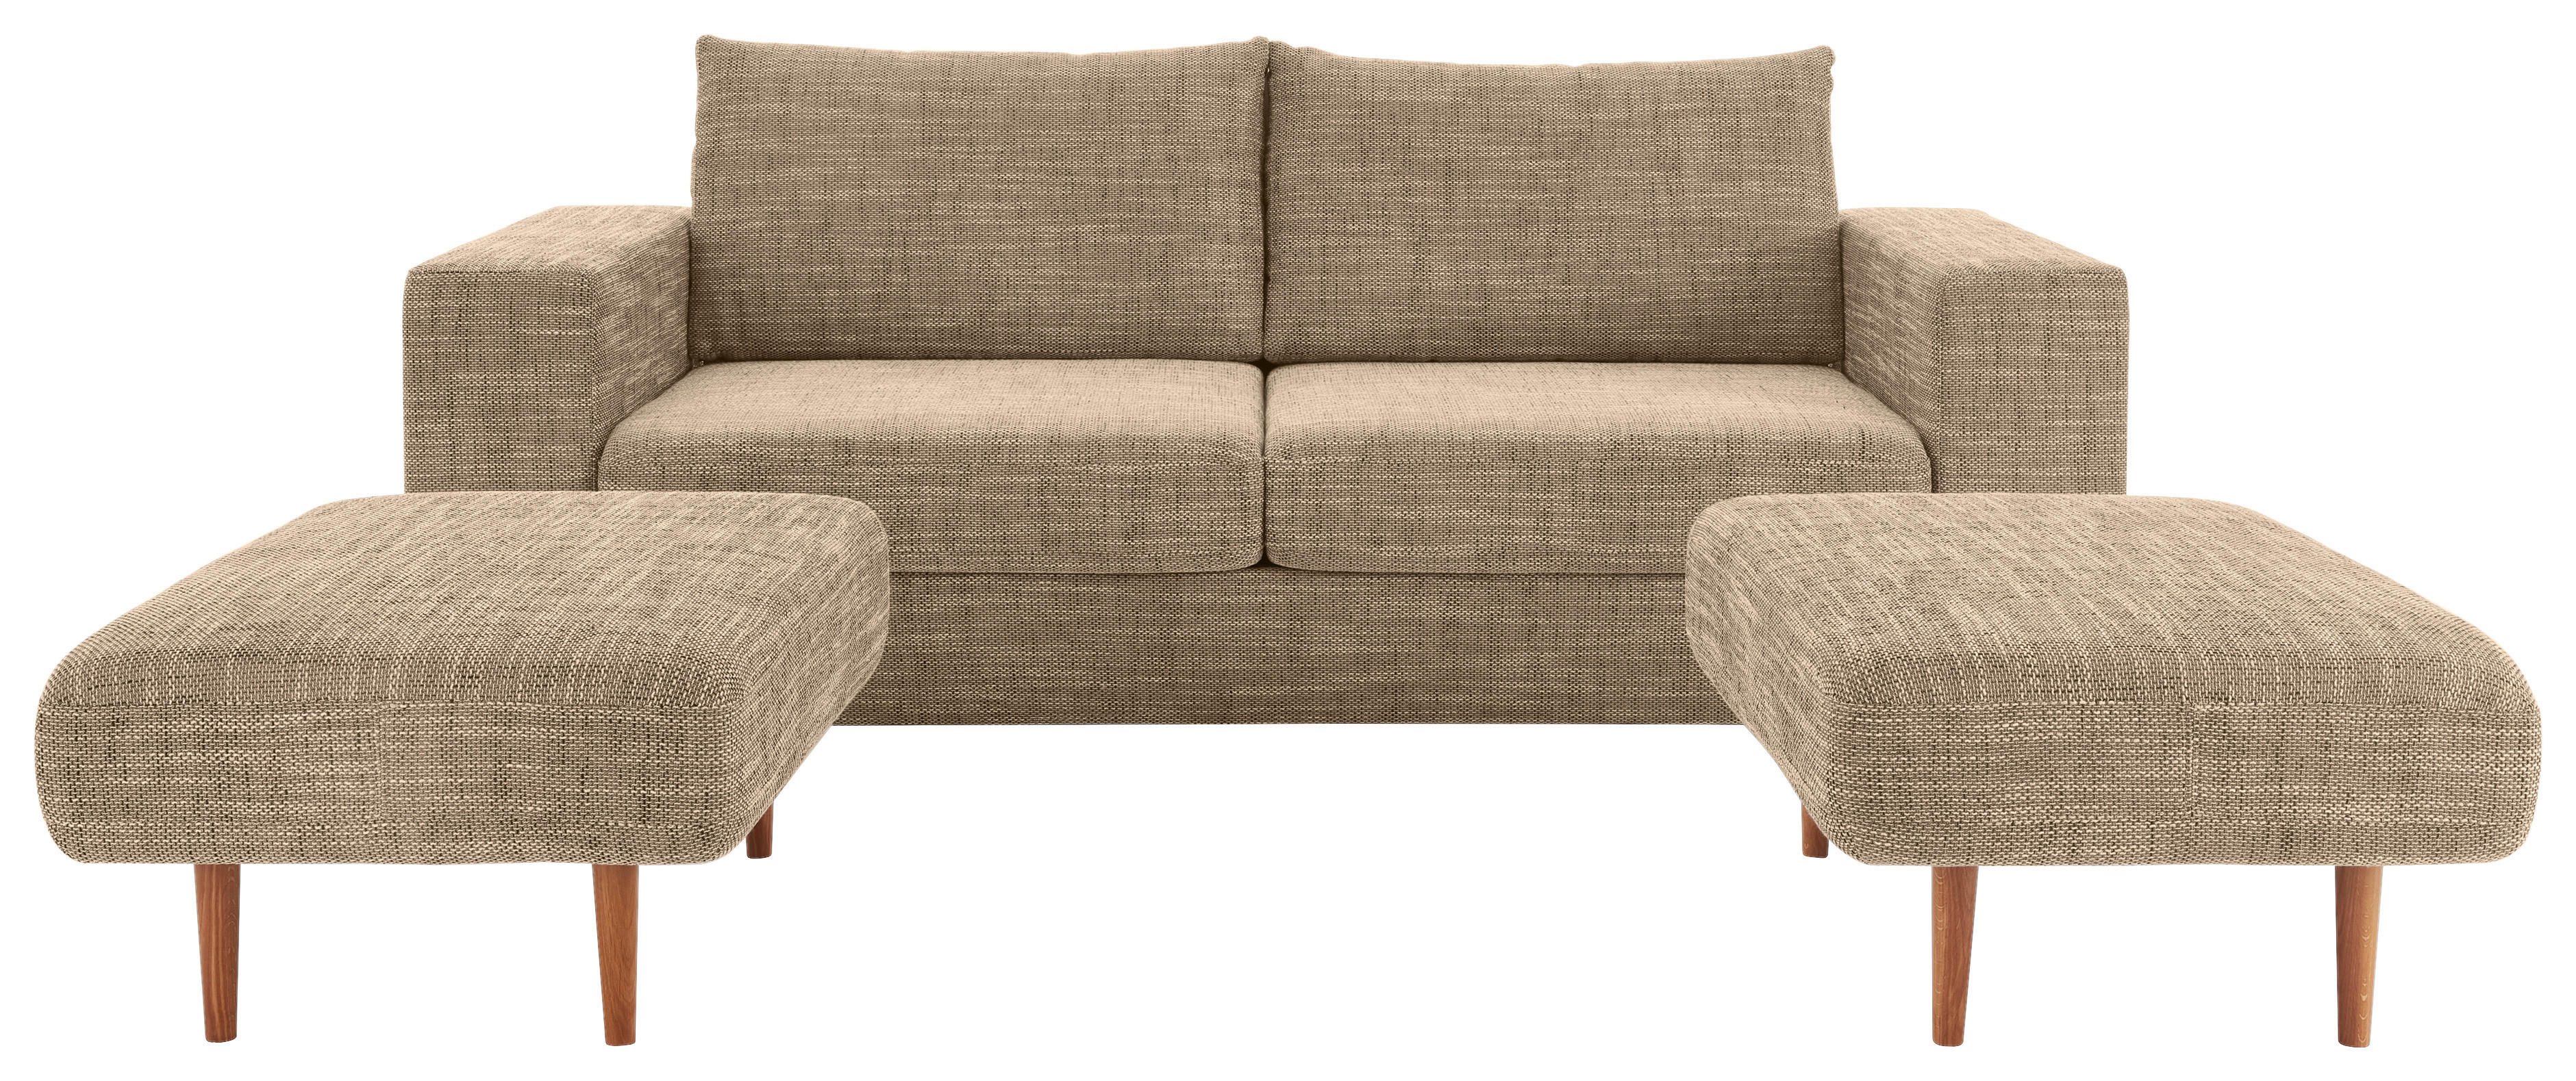 Beige-Braun Zweisitzer-Sofa LOOKS BY WOLFGANG JOOP